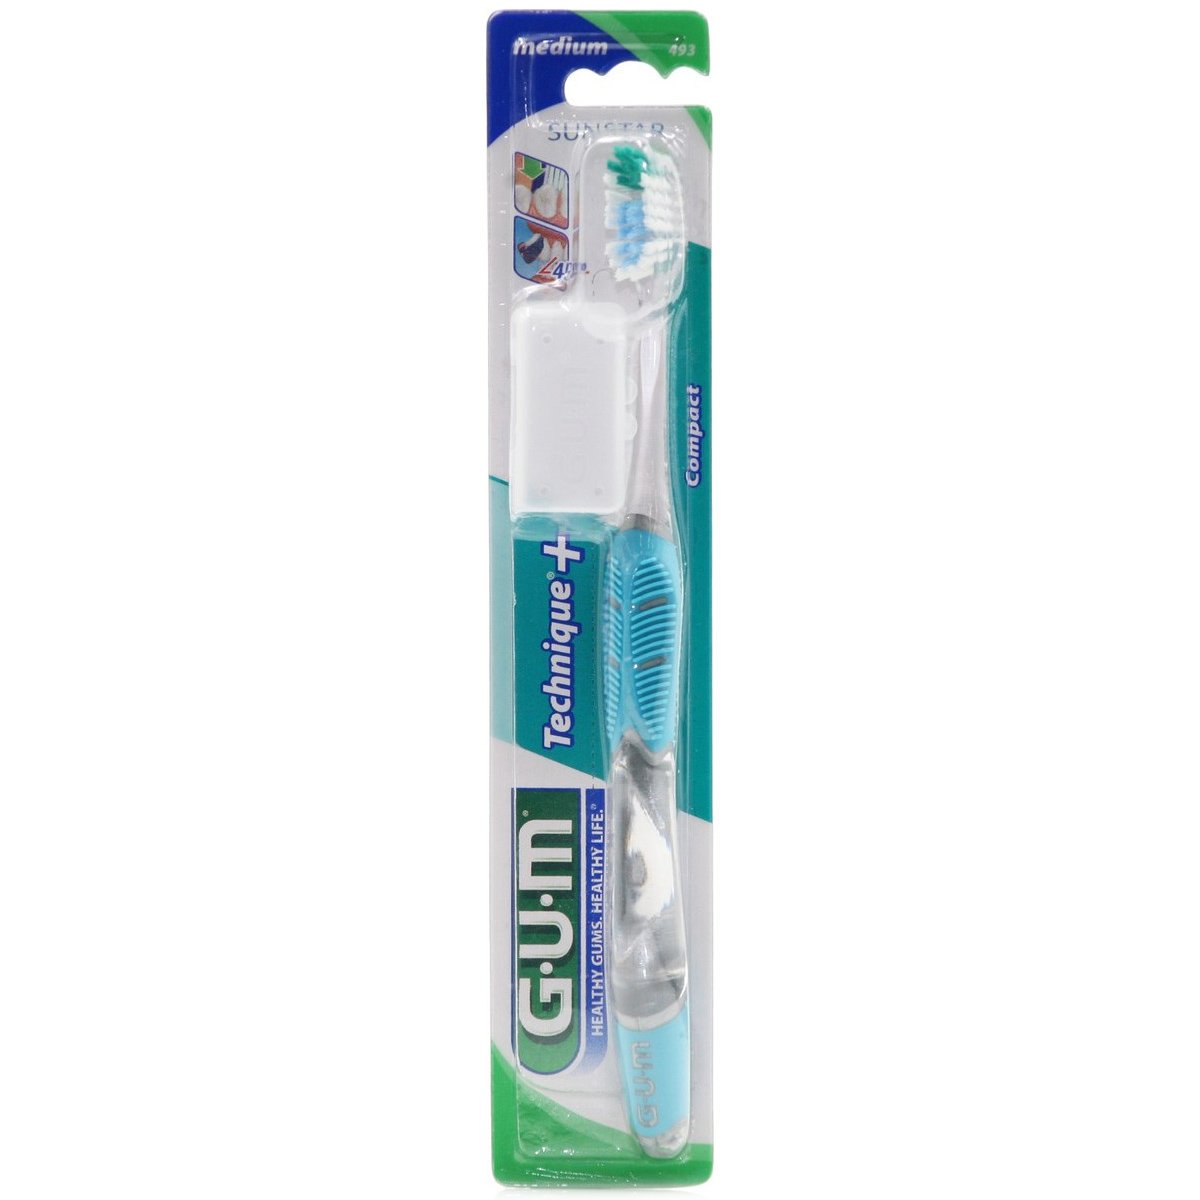 Gum Technique+ Compact Medium Toothbrush 1 Τεμάχιο, Κωδ 493 – Πετρόλ,Χειροκίνητη Οδοντόβουρτσα Μέτρια με Θήκη Προστασίας